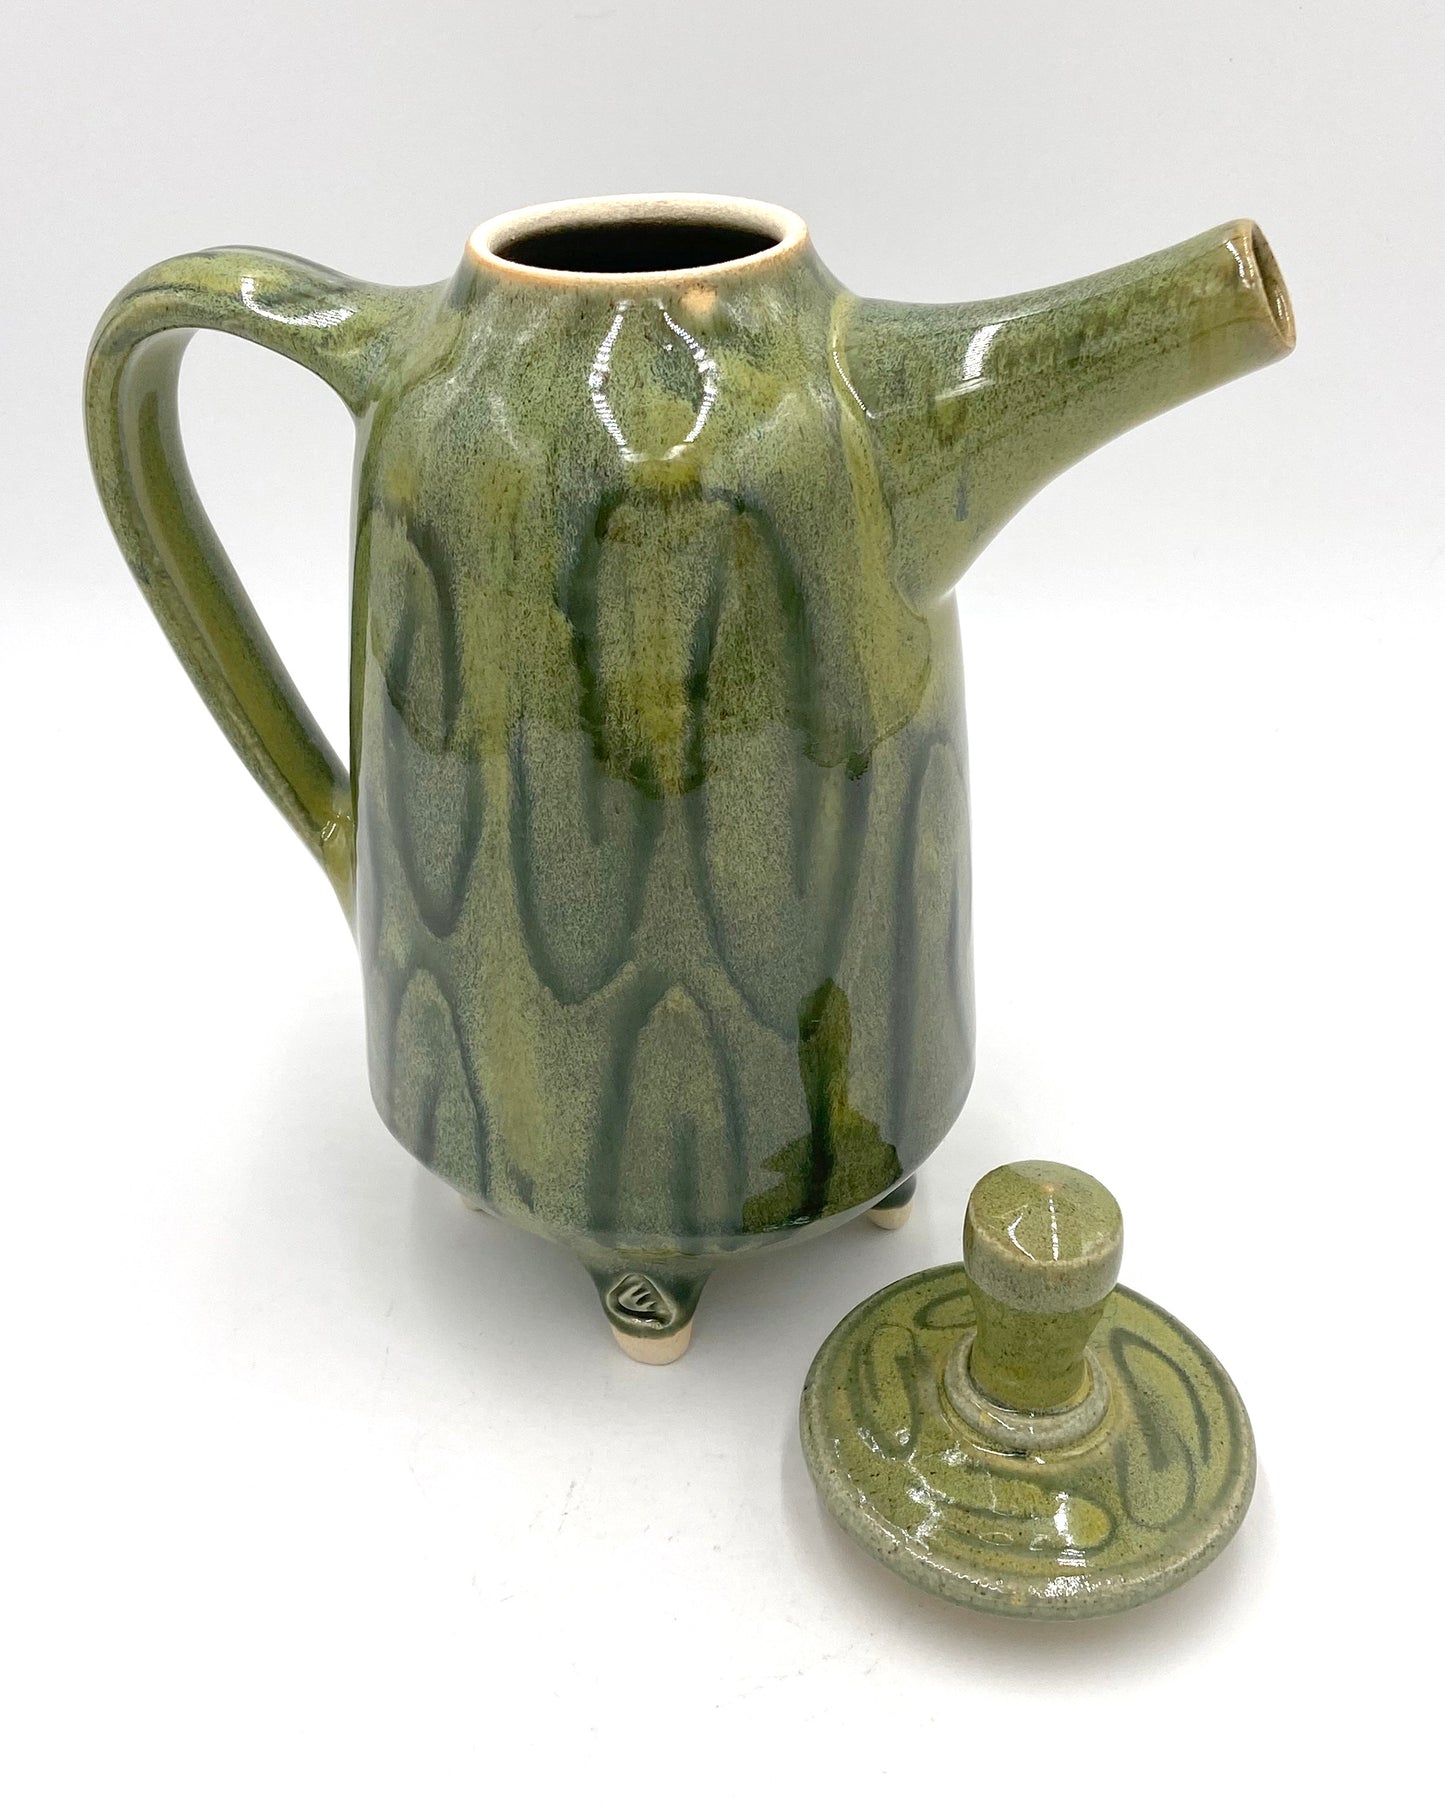 Green "Hooks" Teapot